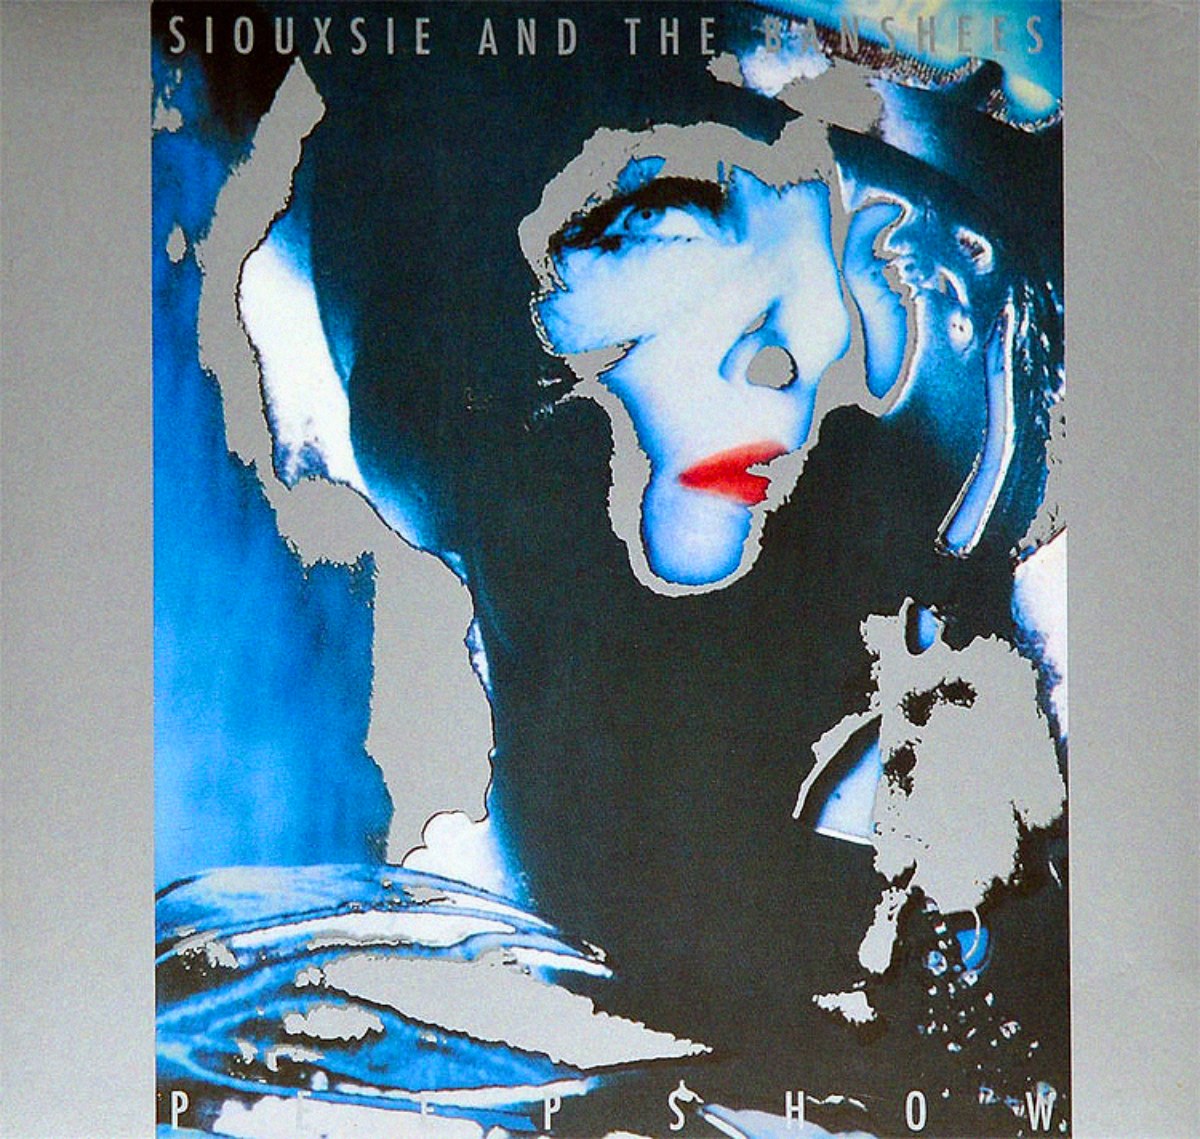 Siouxsie And The Banshees, Peepshow album (1988)